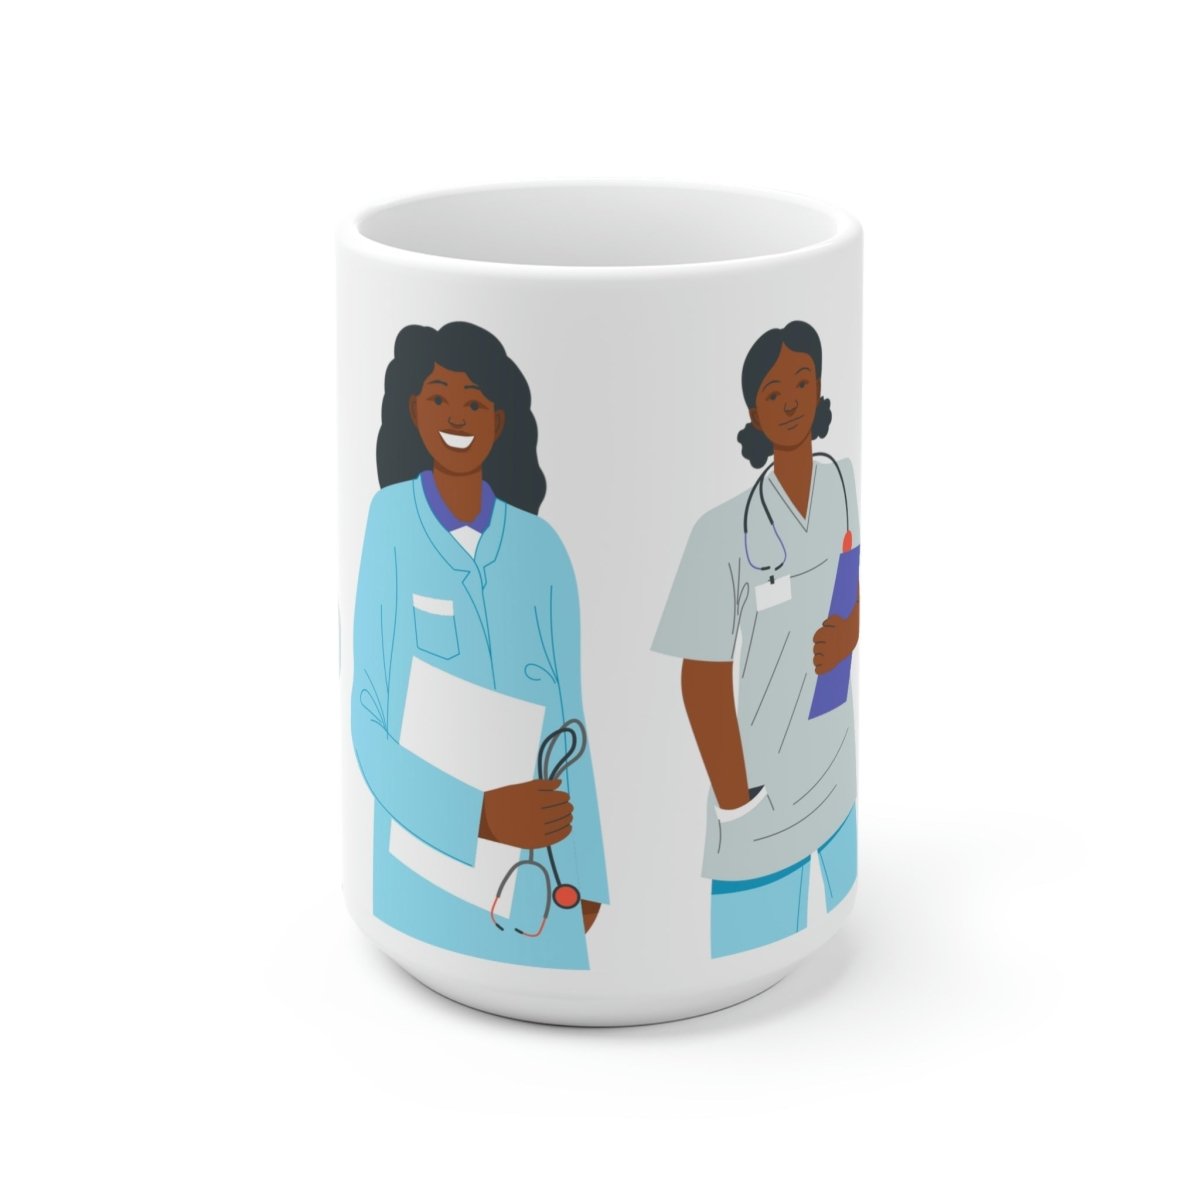 Female Doctors Mug - The Trini Gee